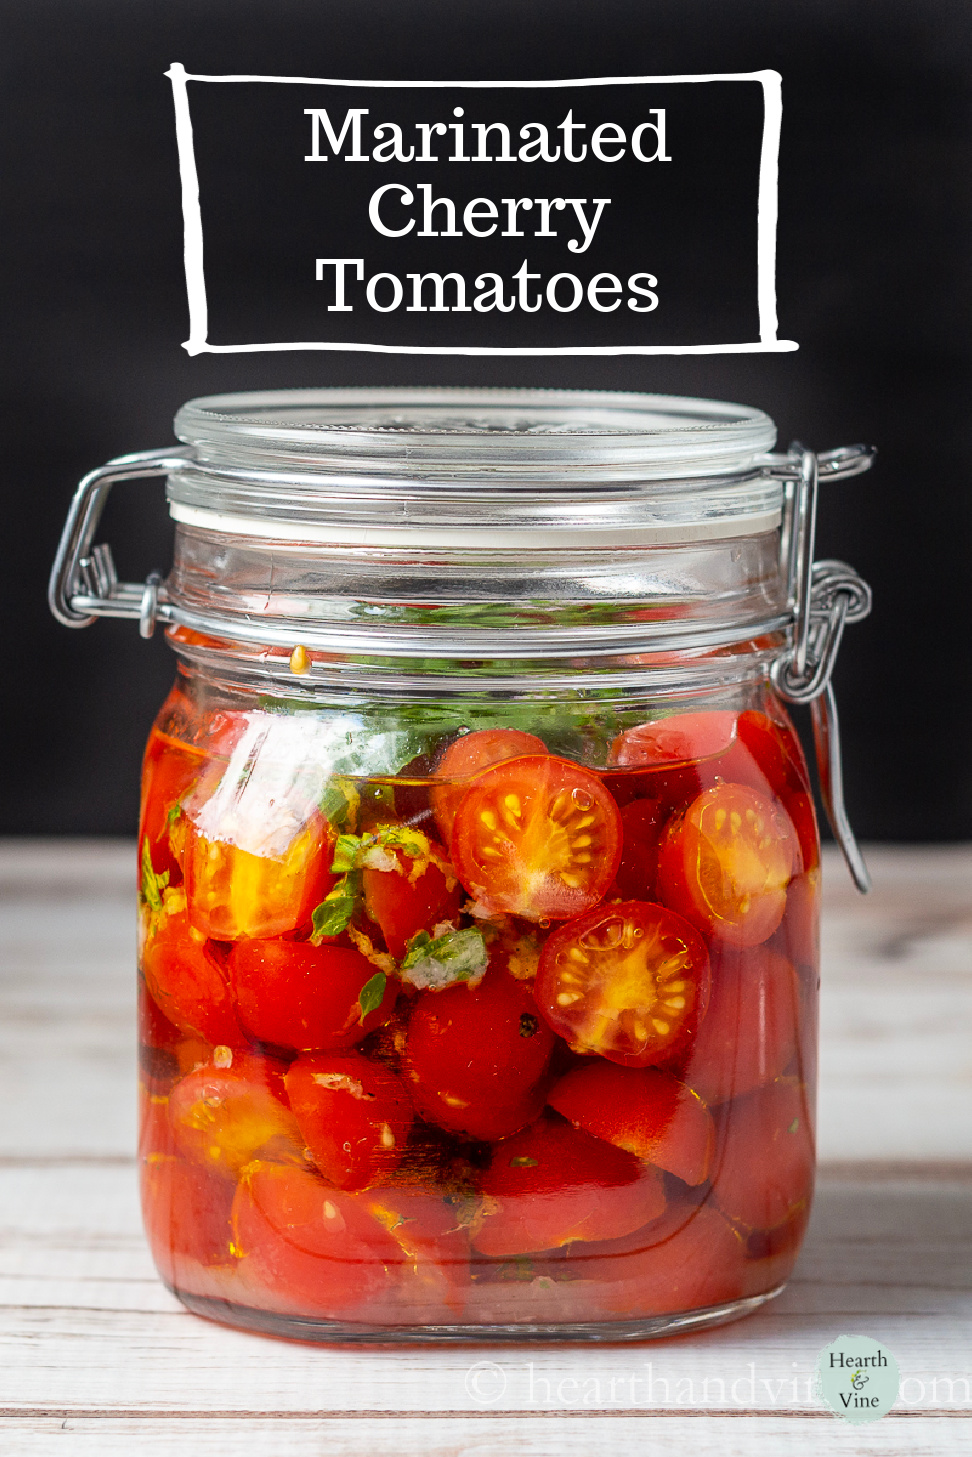 Large air-tight jar of marinated tomatoes.